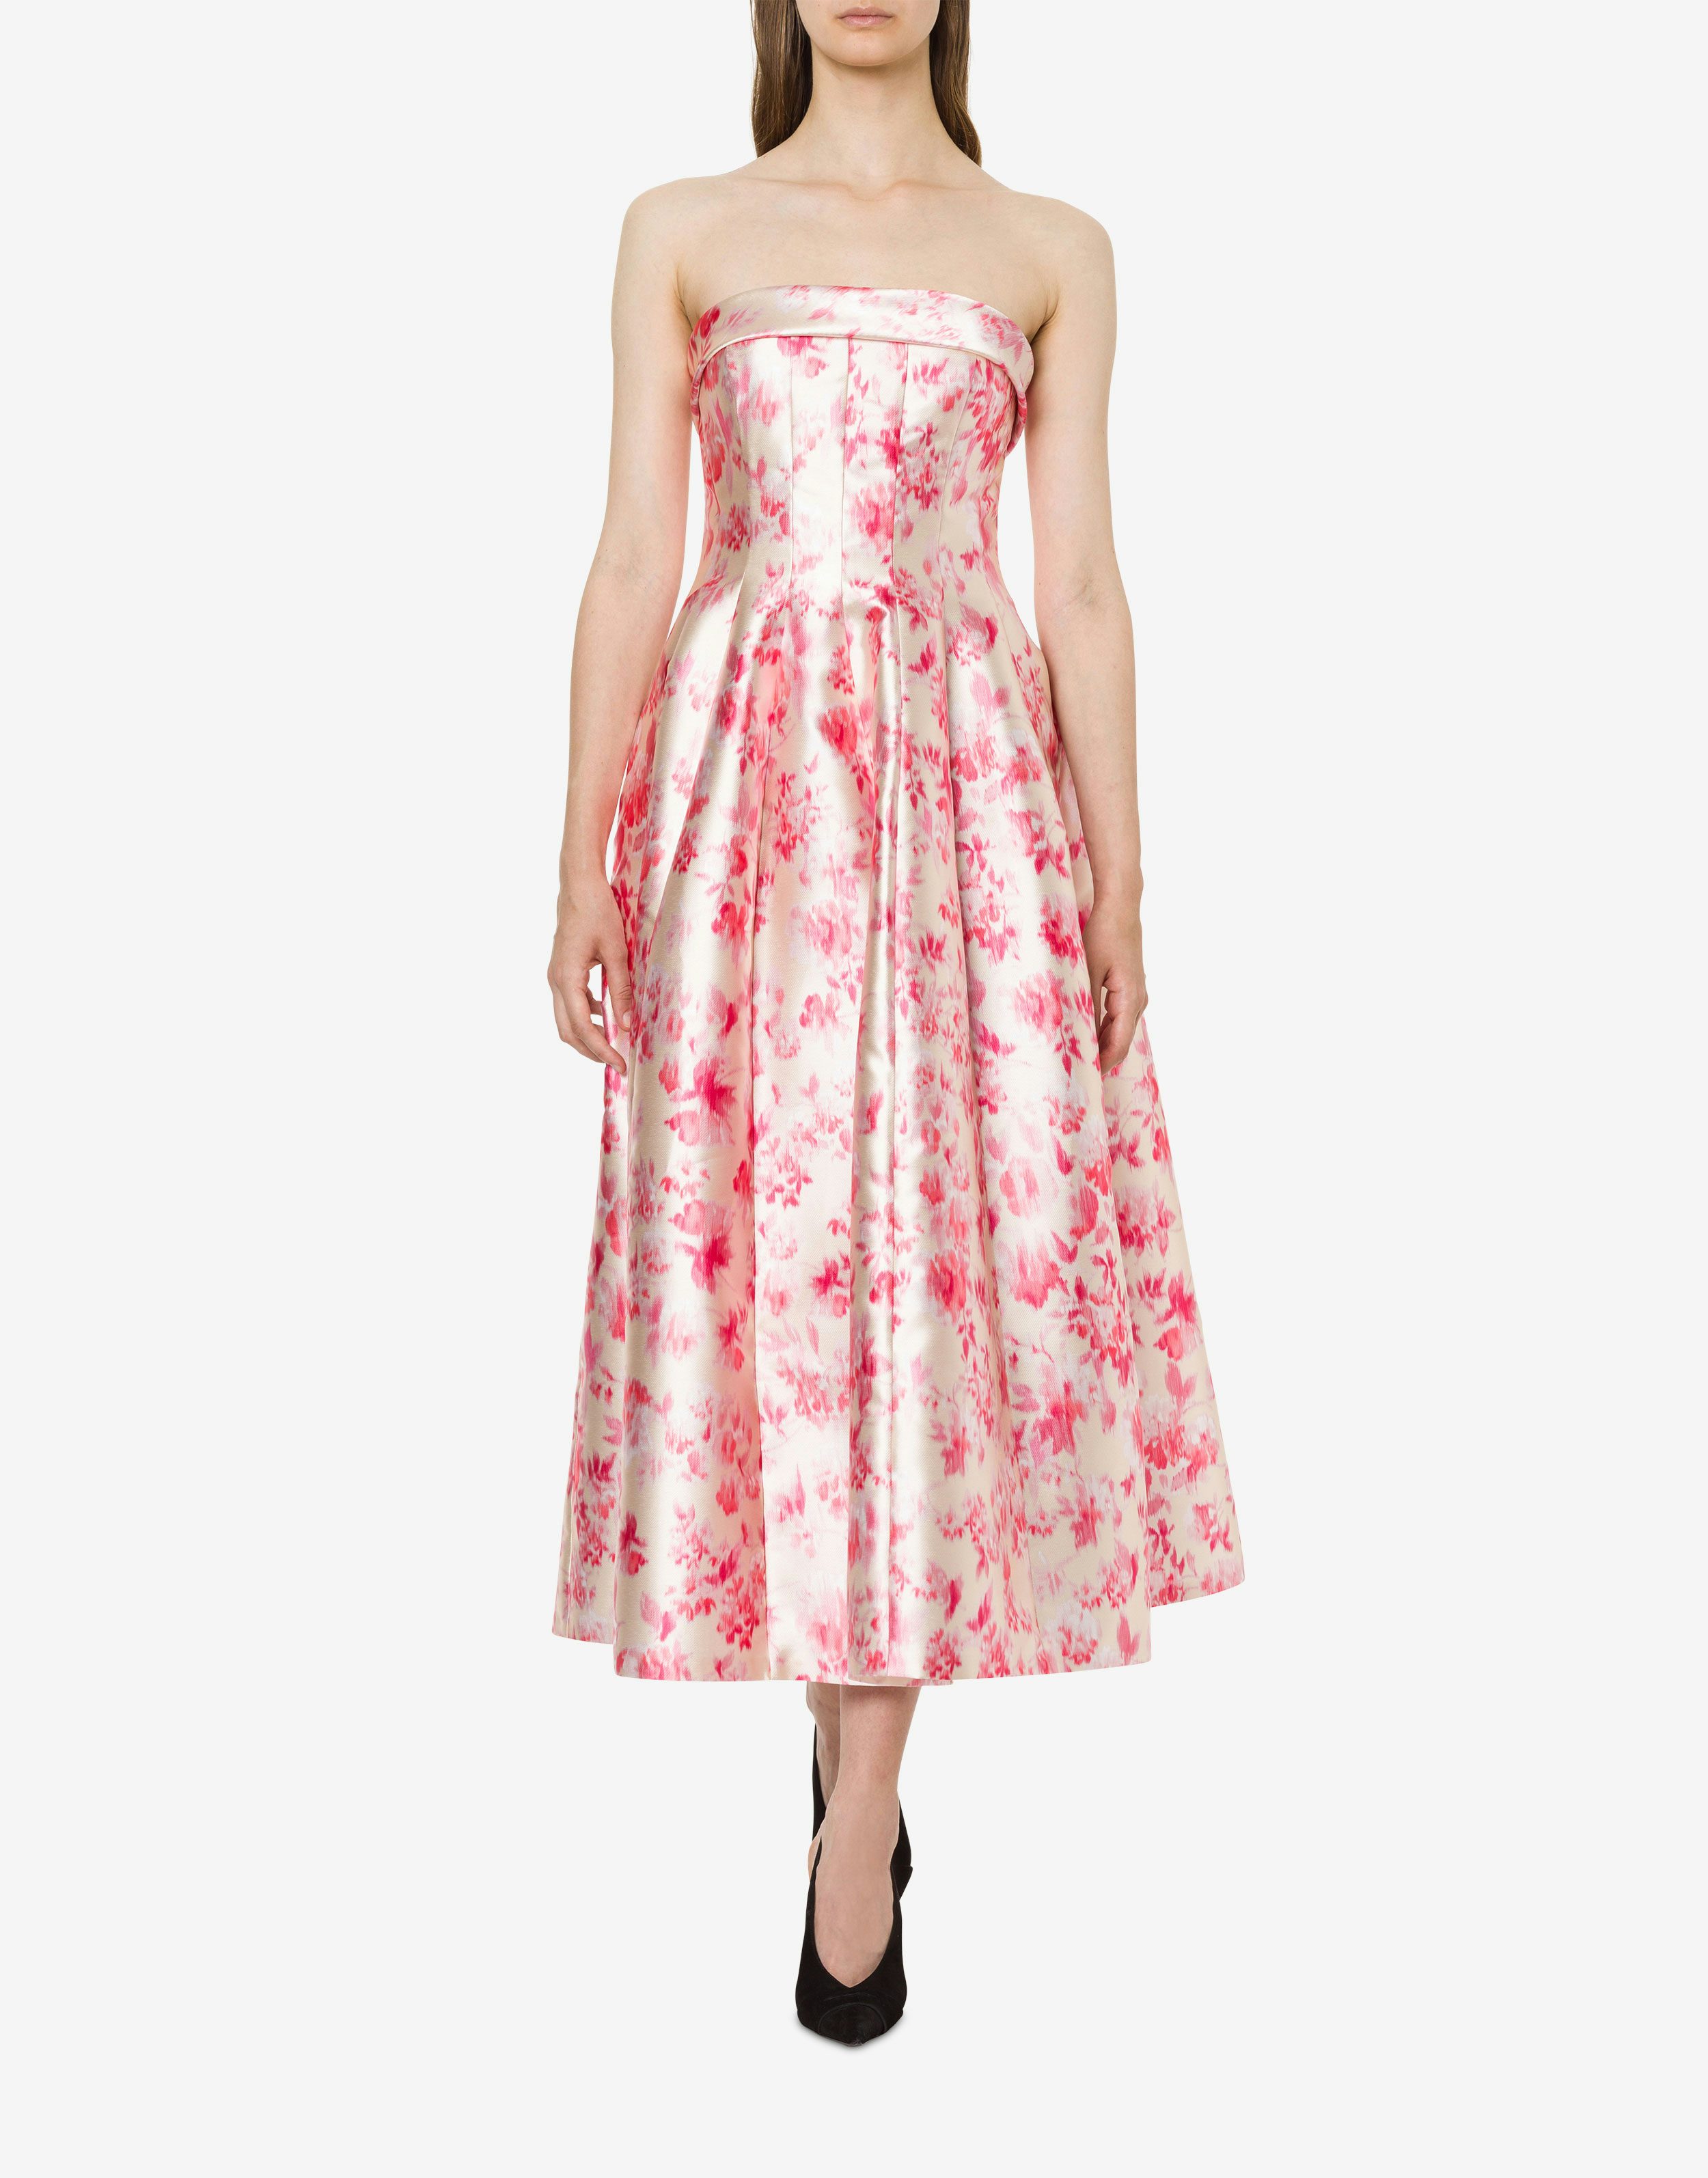 Radzmir bustier dress with flower print